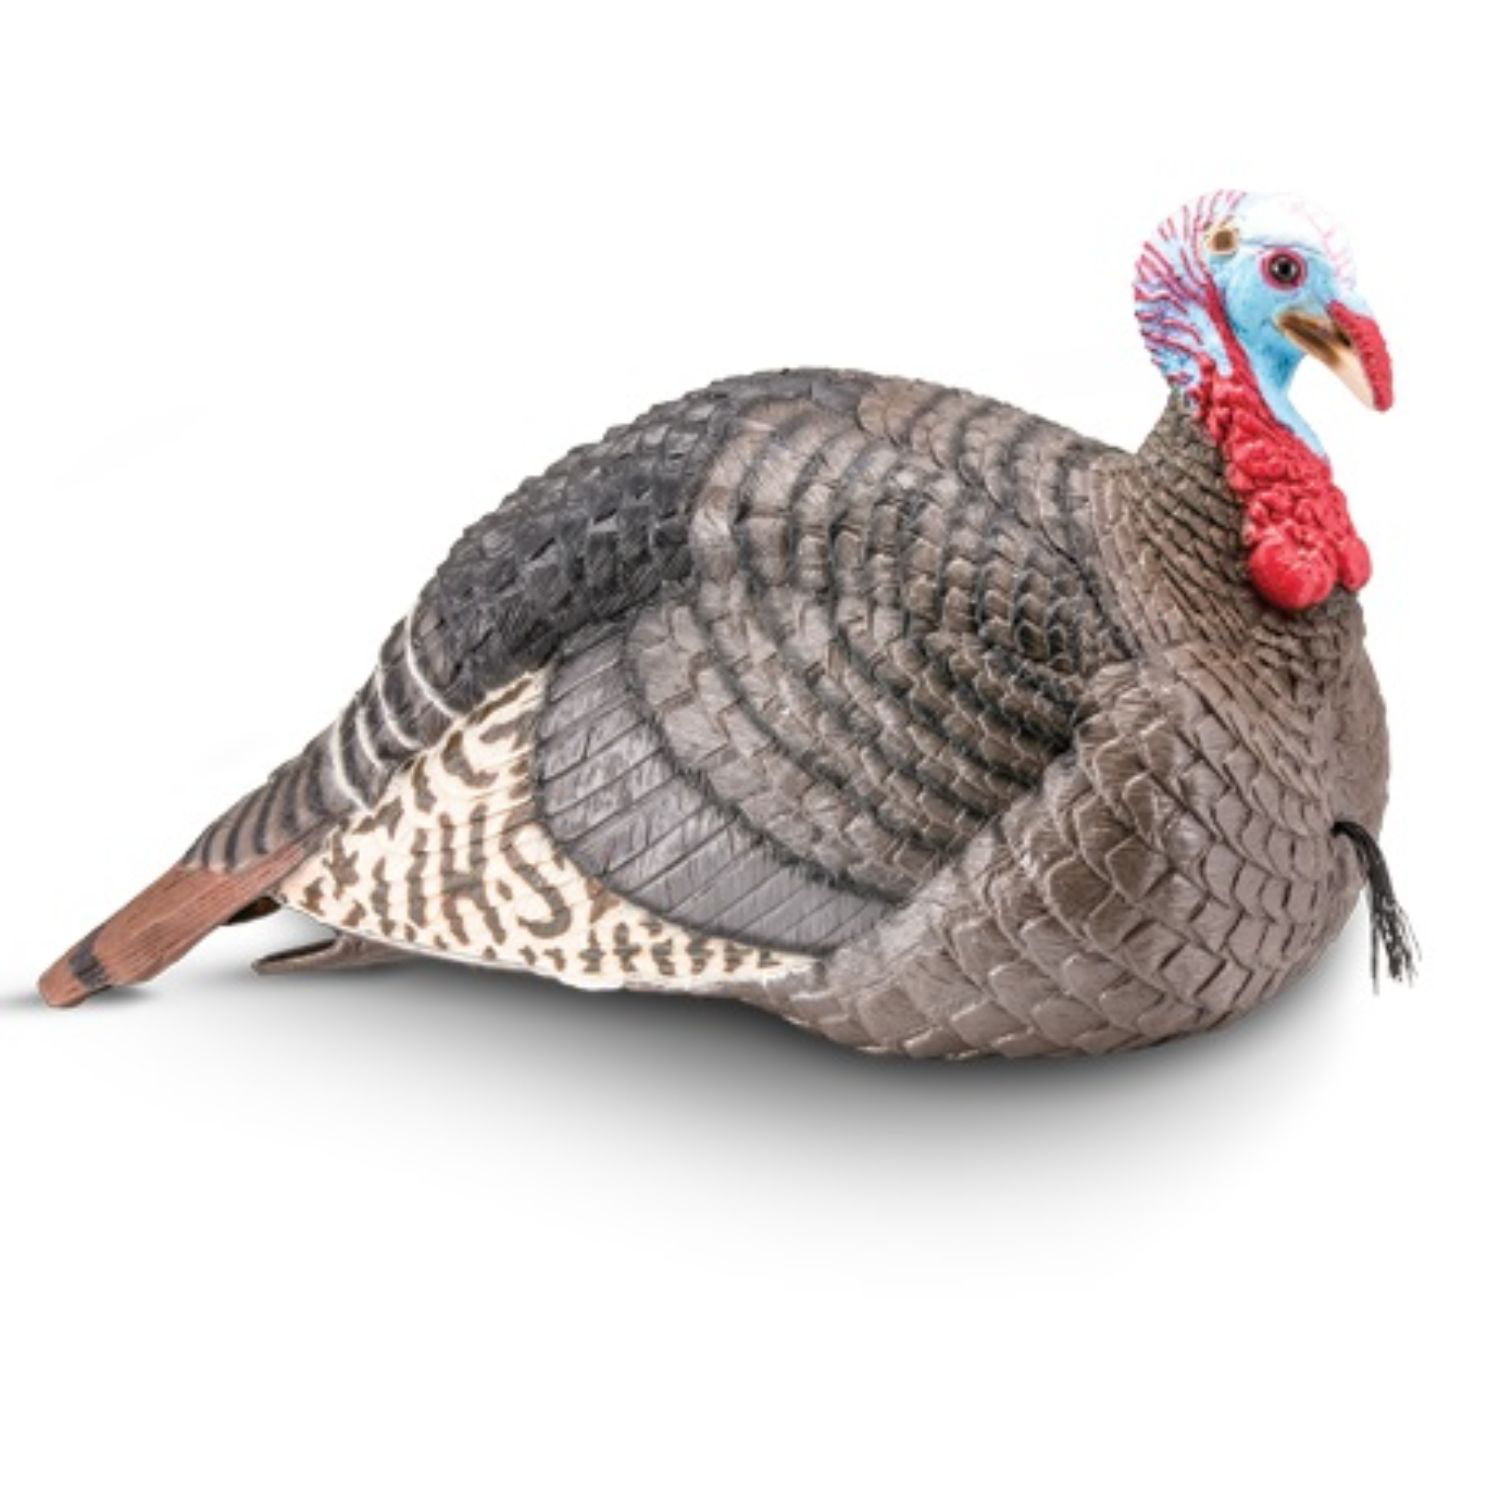 Hunters Specialties 100005 Strut-lite Hen and Jack Turkey Decoy for sale online 